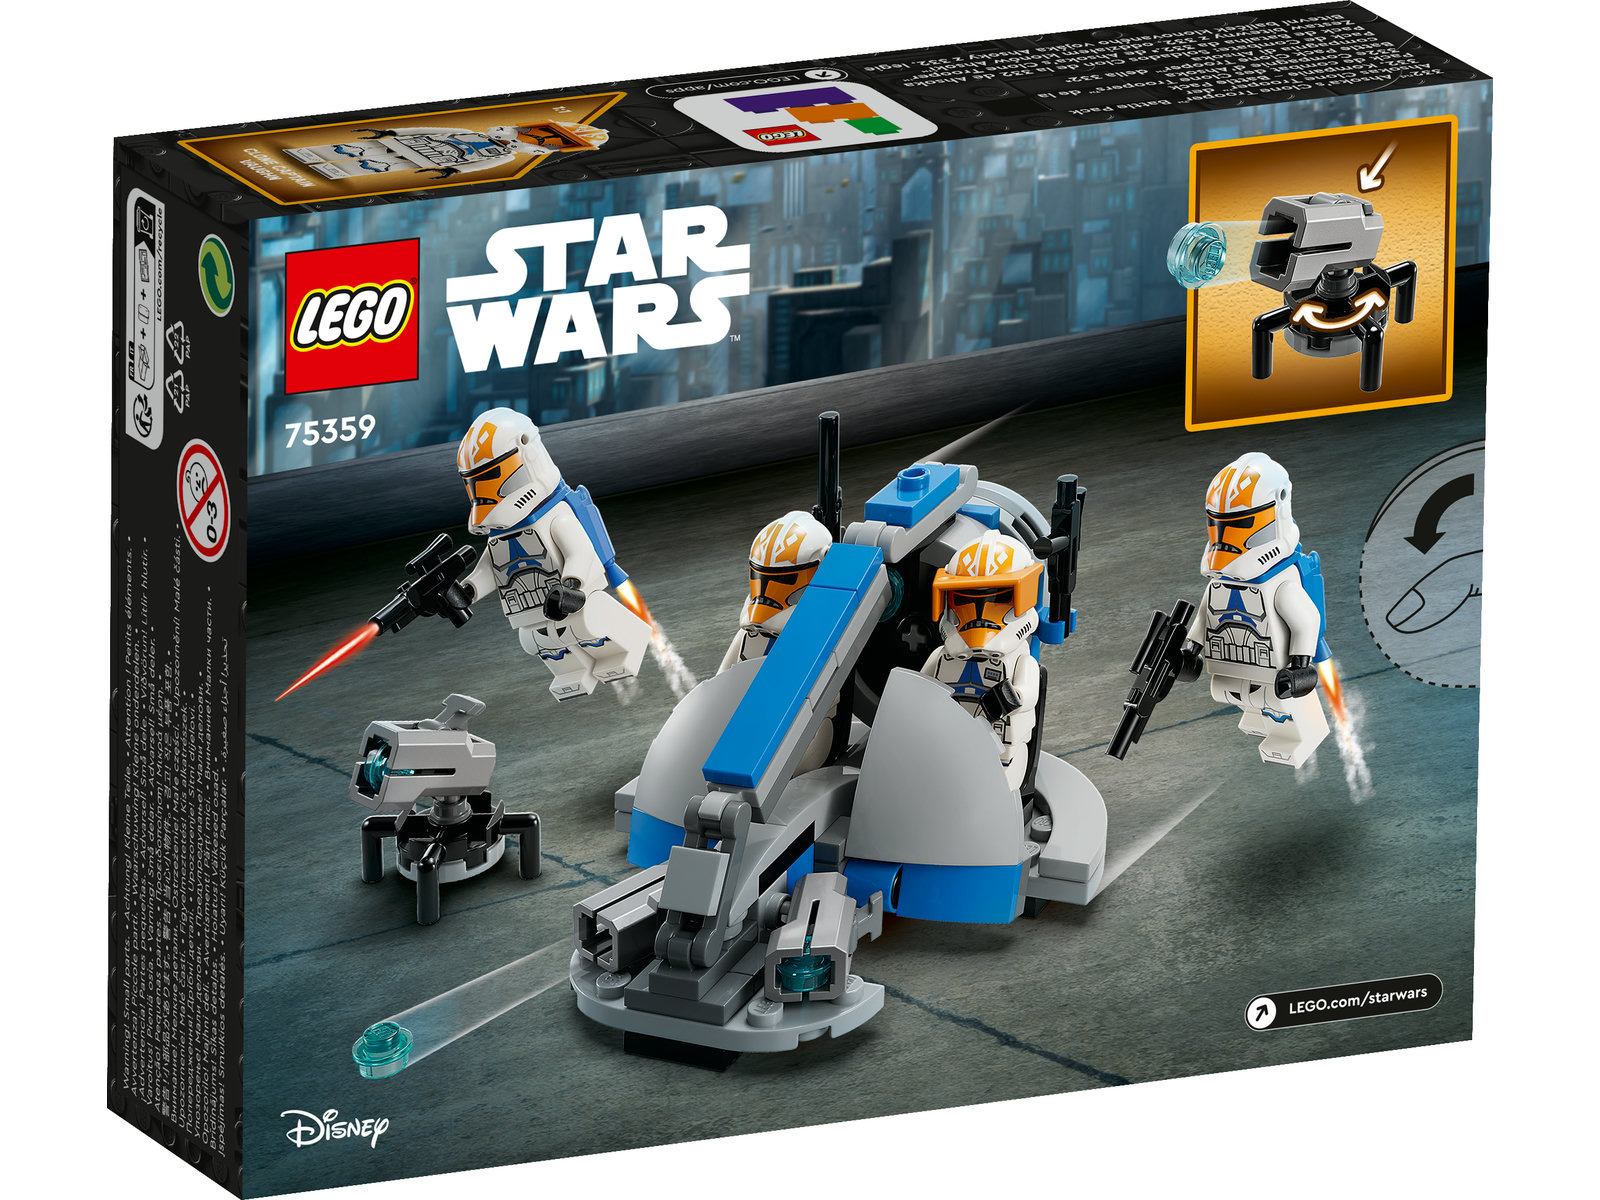 LEGO® Star Wars™ 75359 - Ahsokas Clone Trooper™ der 332. Kompanie – Battle Pack